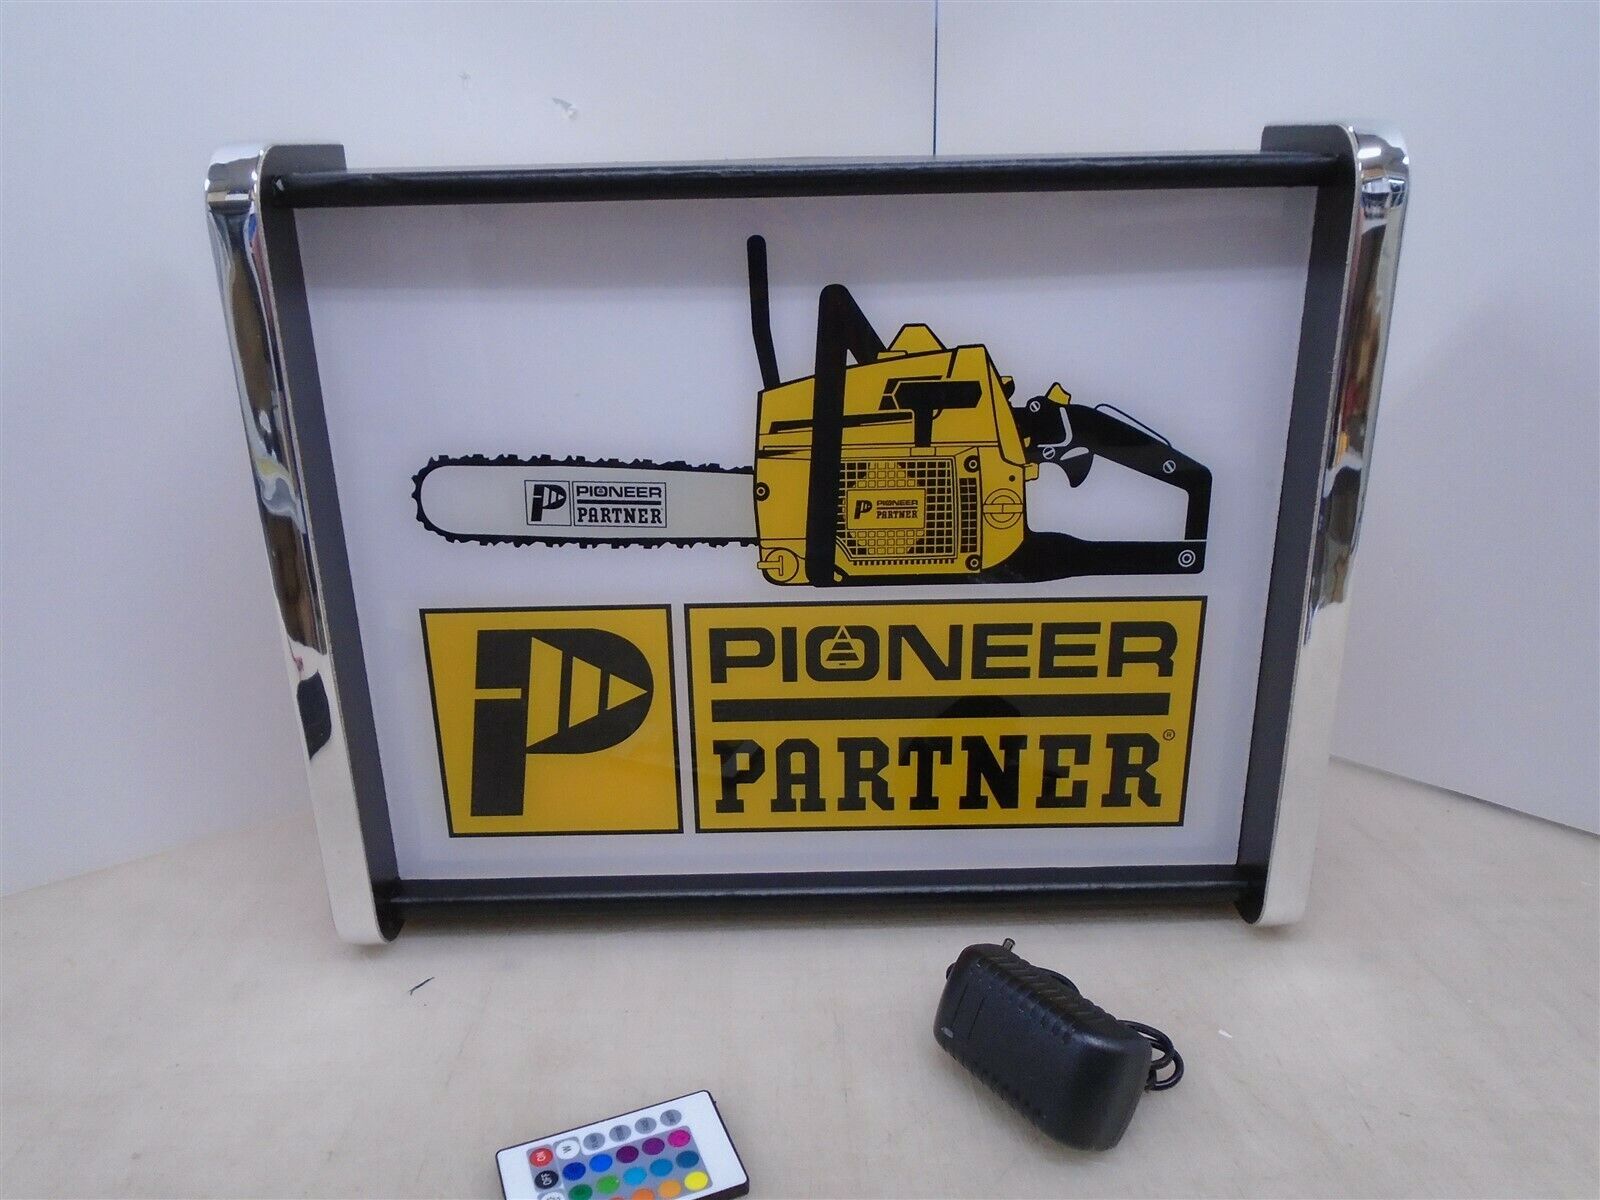 Pioneer Partner Chain Saw LED Display light sign box